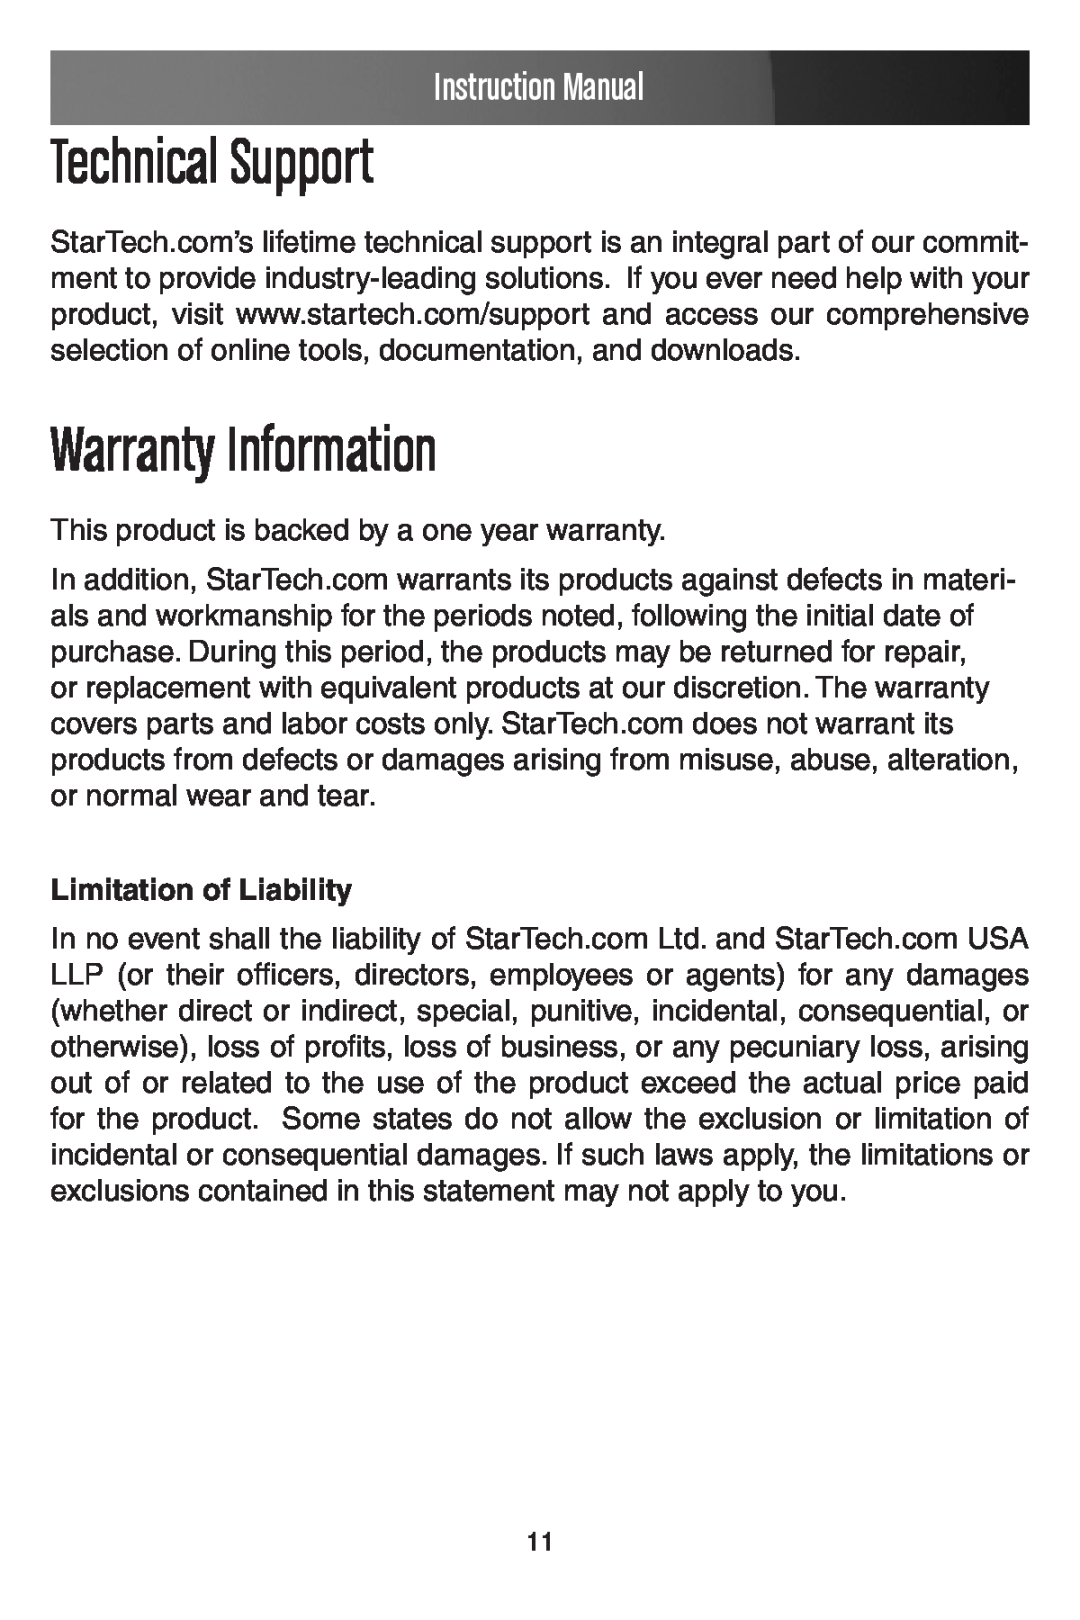 StarTech.com SATADOCKU2 Technical Support, Warranty Information, Instruction Manual, Limitation of Liability 